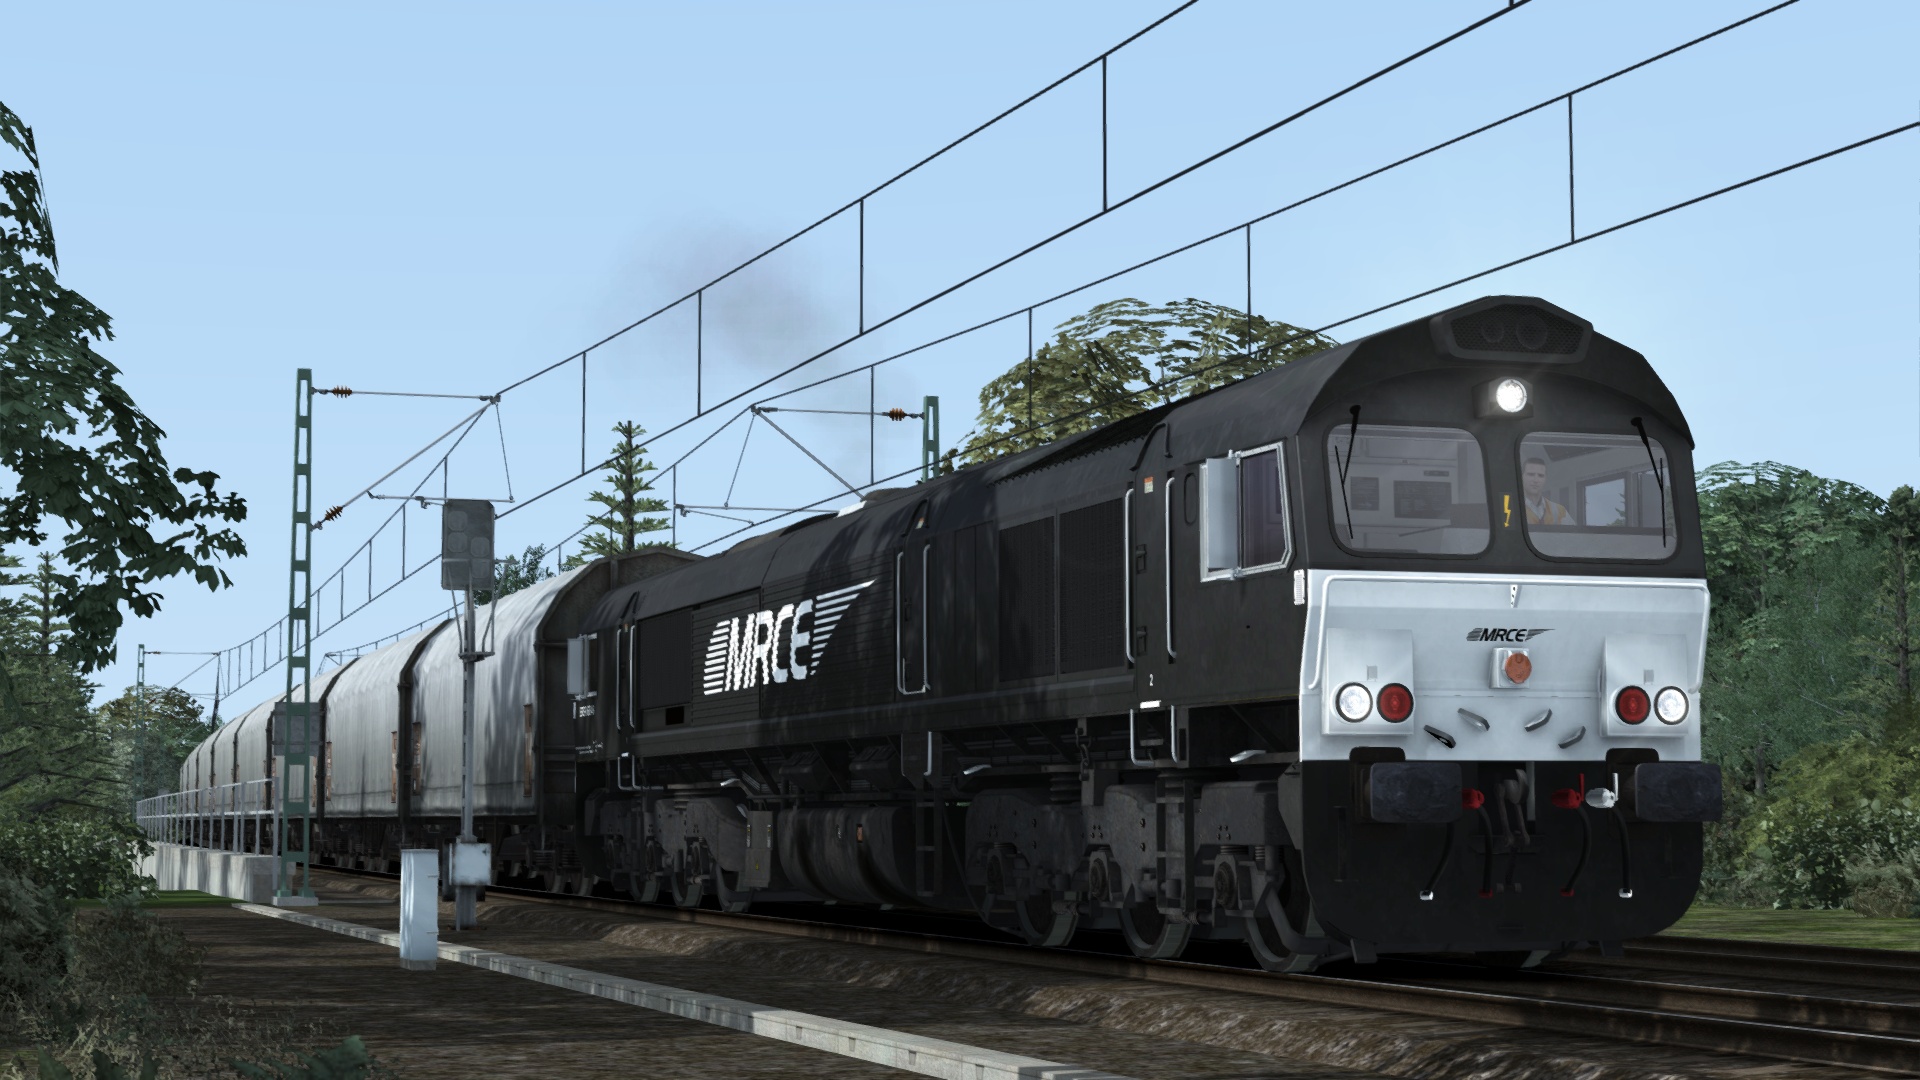 Train Simulator - MRCE Dispolok Pack Loco Add-On DLC Steam CD Key